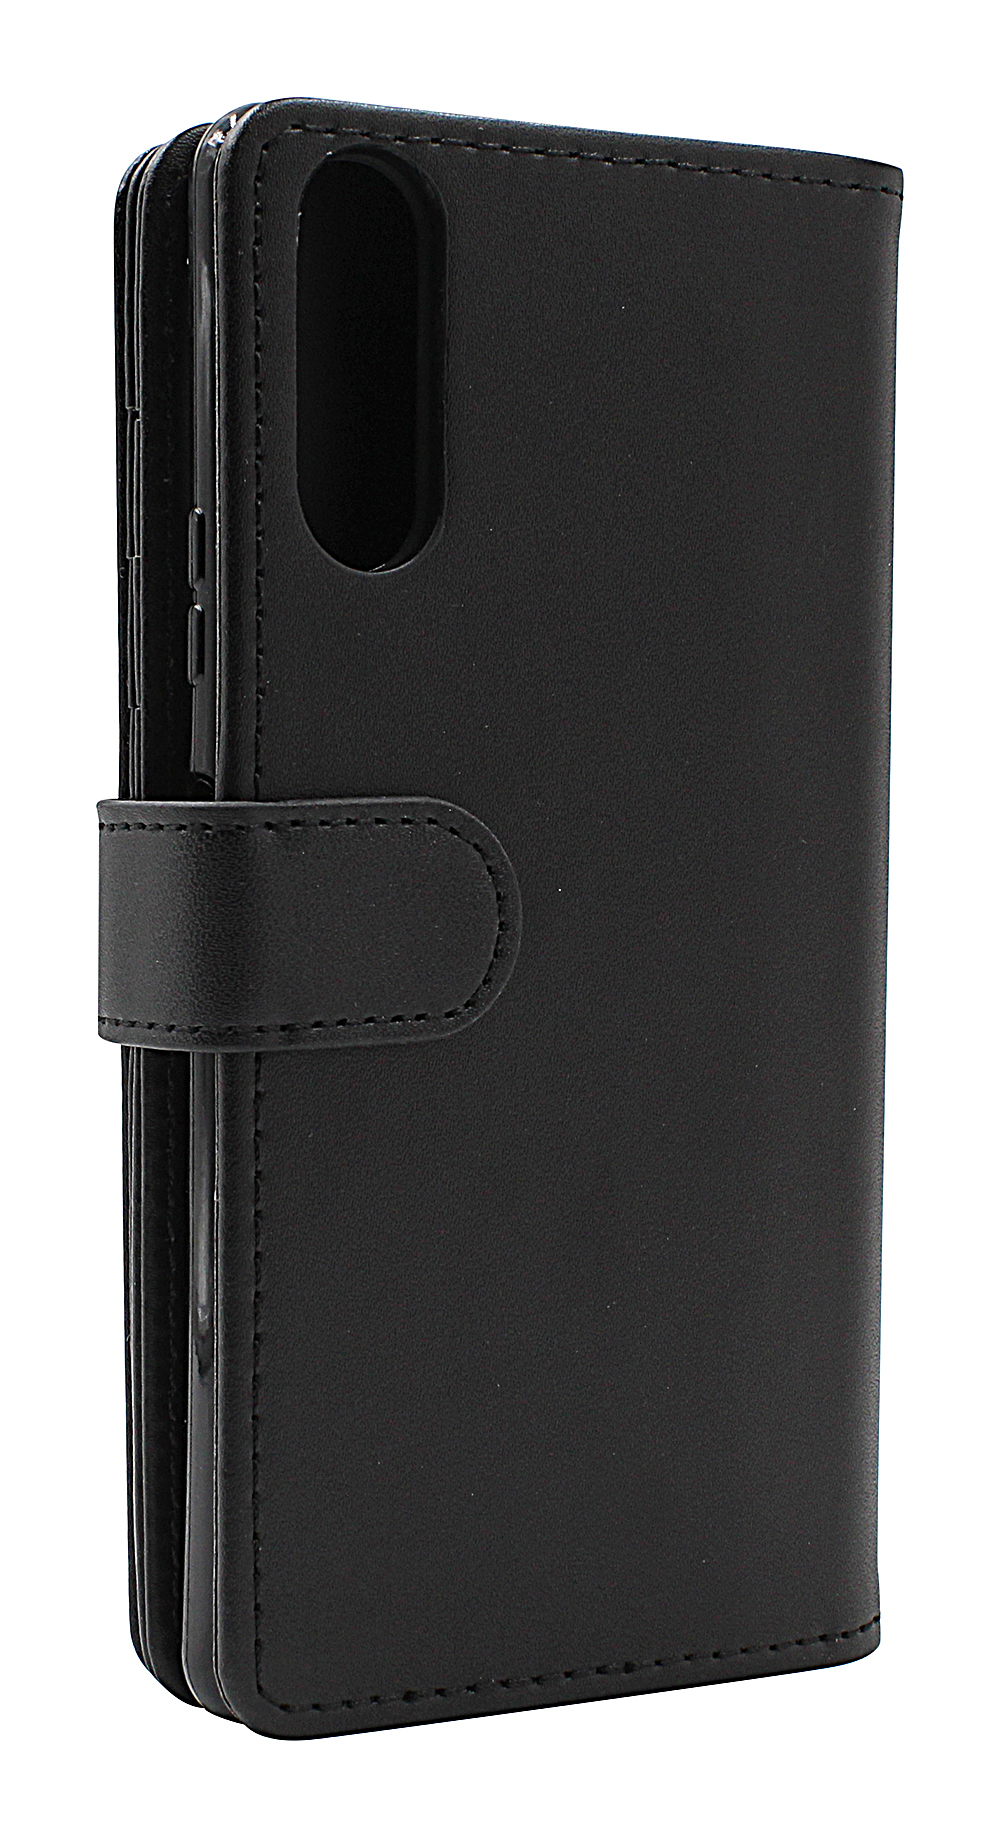 CoverInSkimblocker XL Wallet Sony Xperia 10 II (XQ-AU51/XQ-AU52)